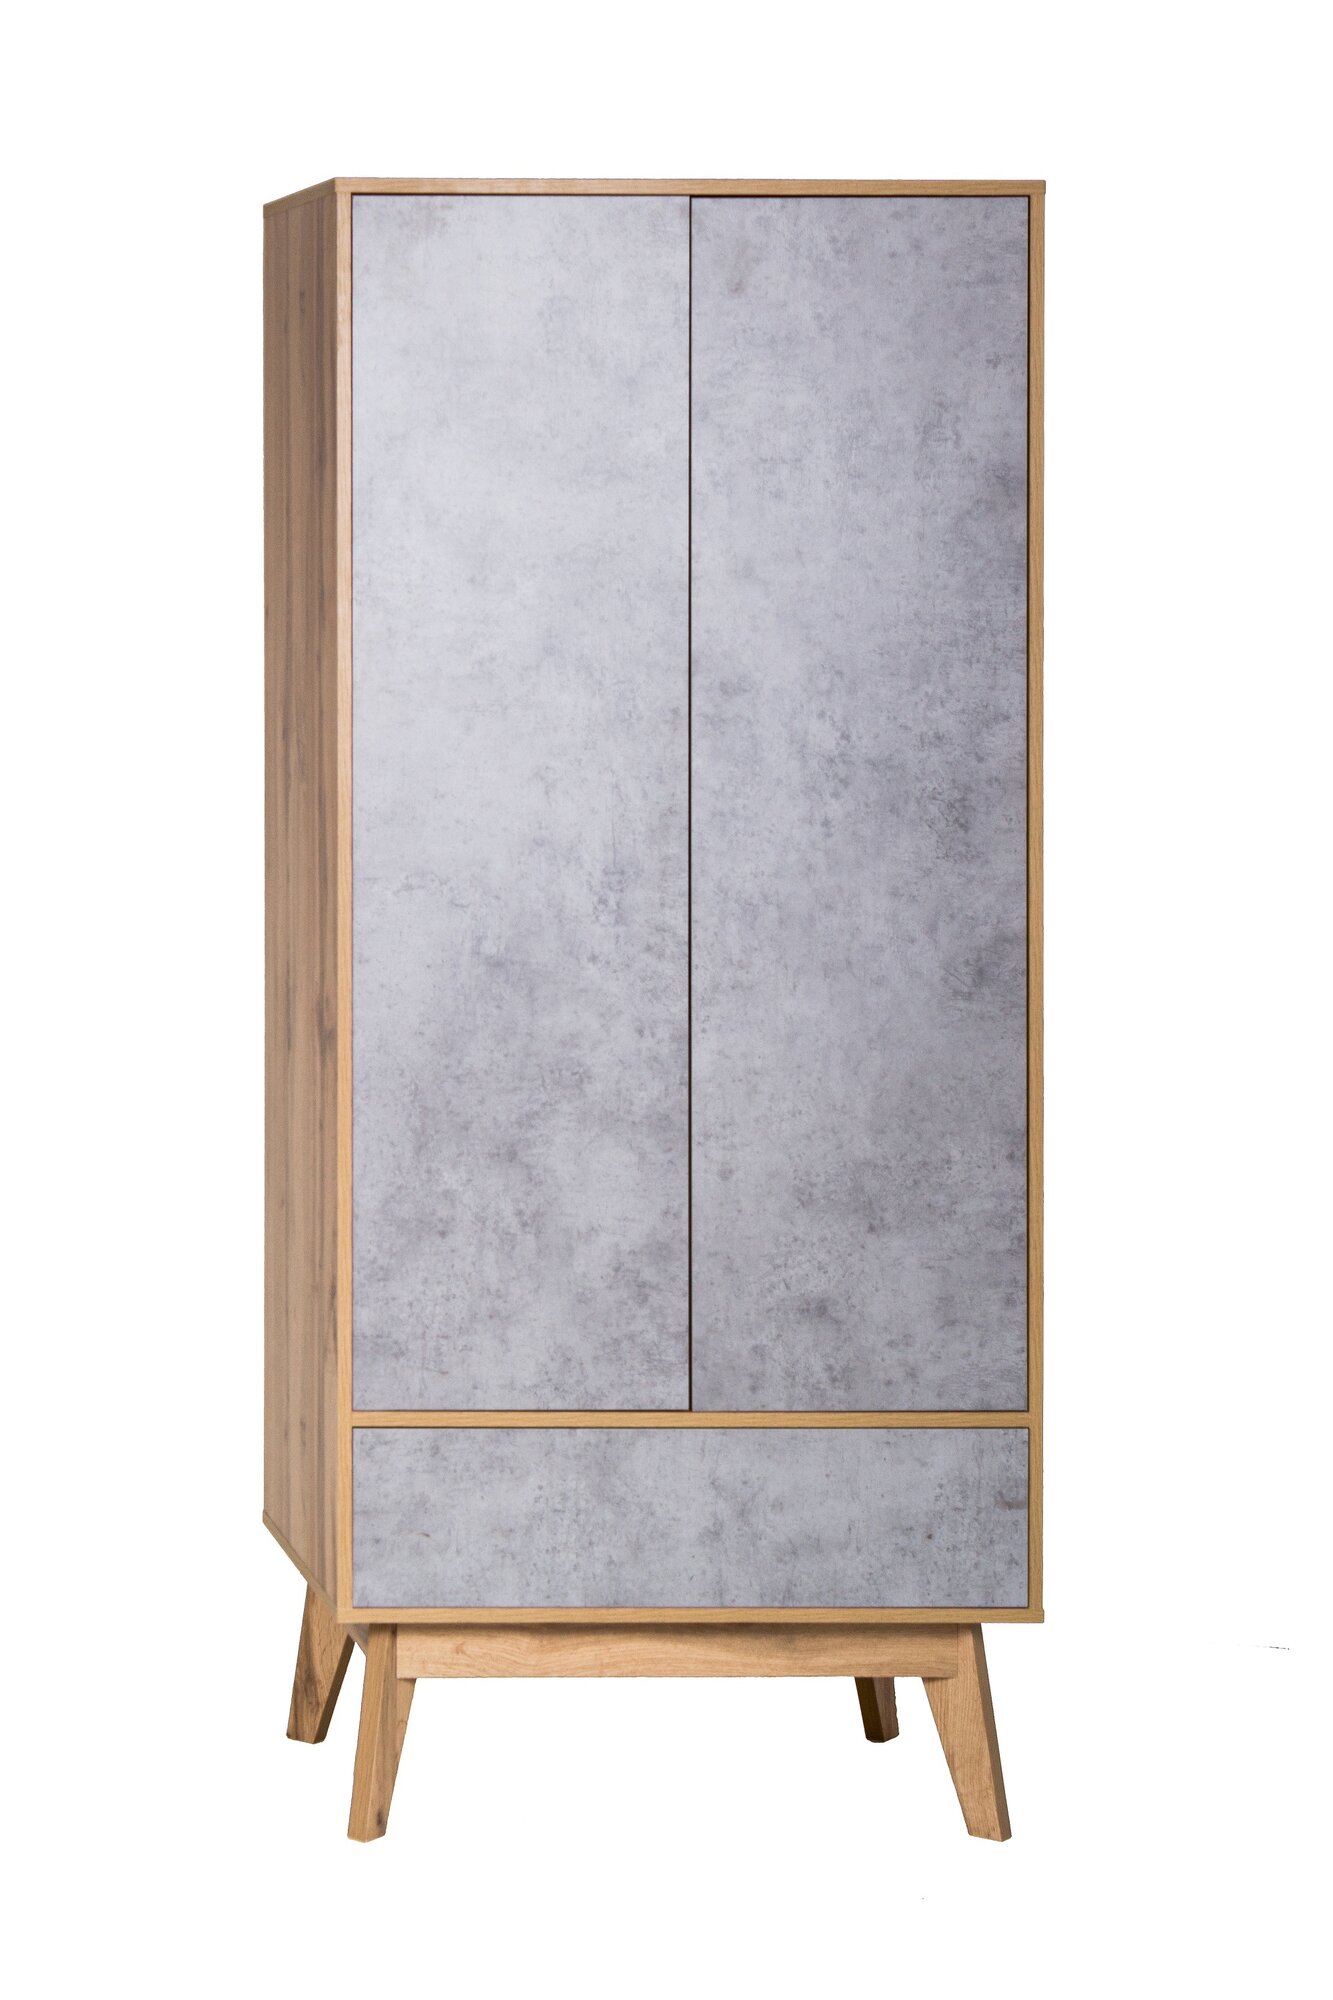 Шкаф для одежды распашной, Принцесса Мелания, Хелен 2213 Дуб / Бетон, размер 1850х800х500мм